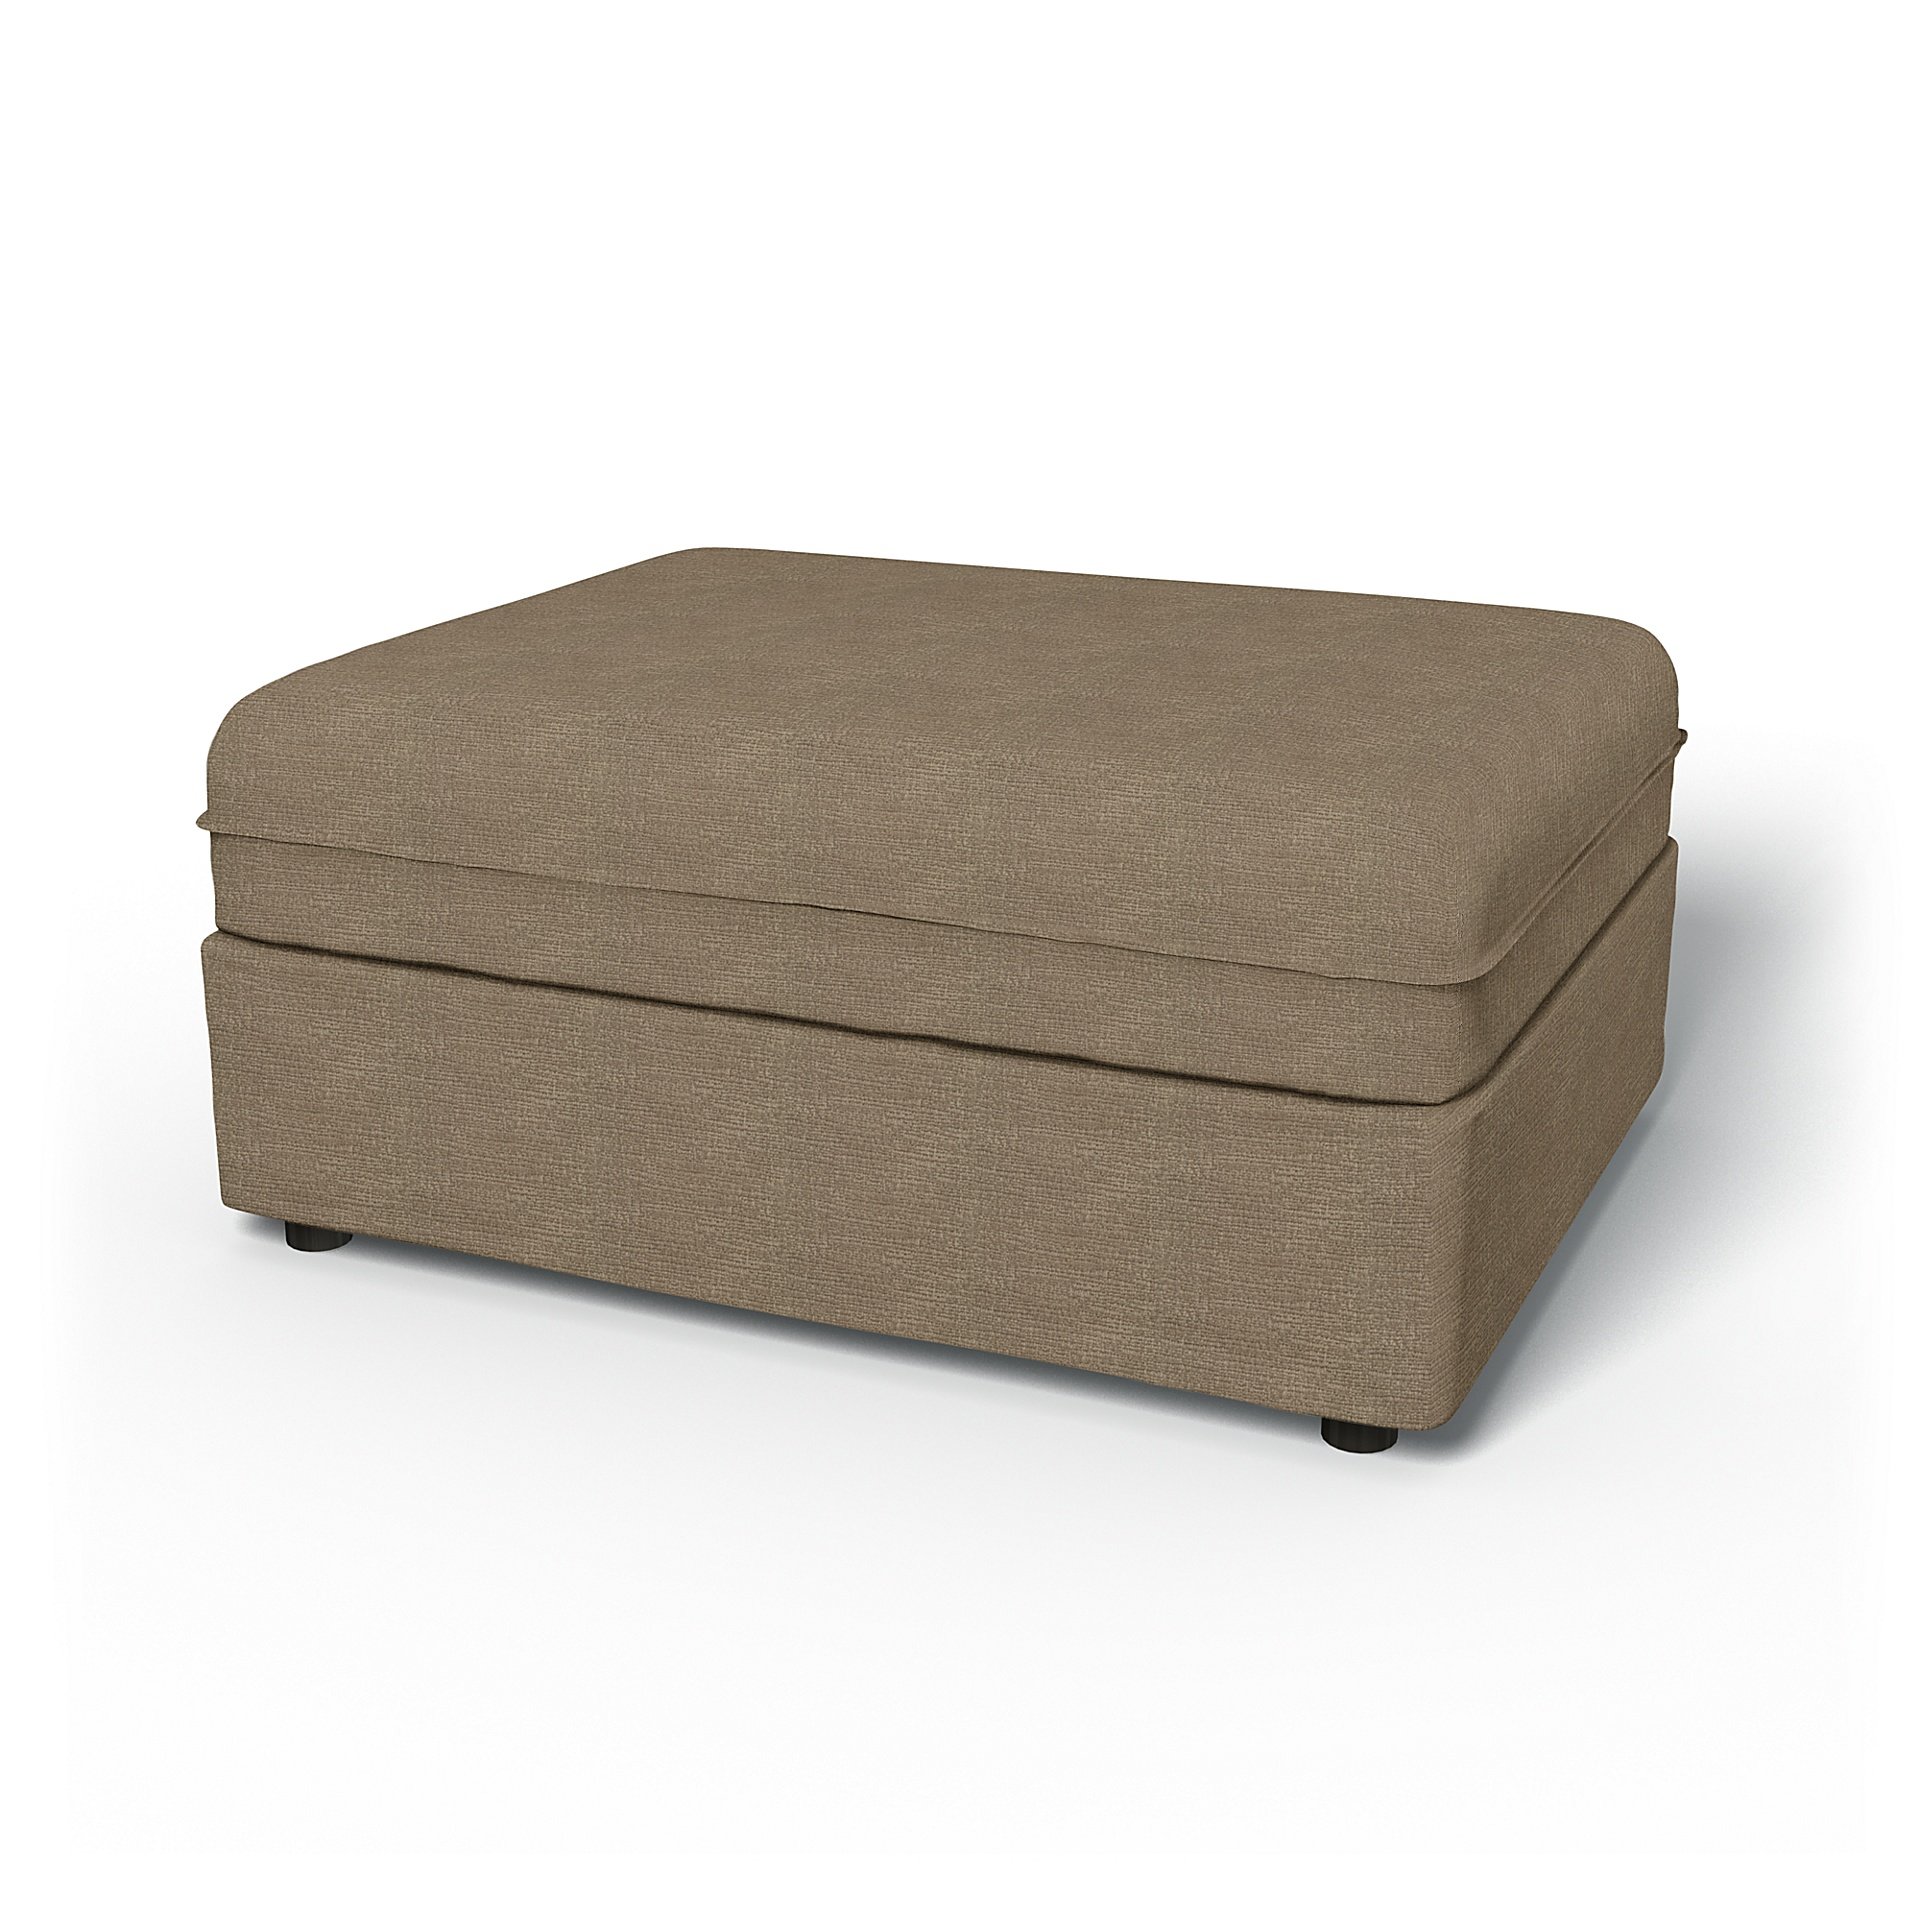 IKEA - Vallentuna Seat Module Cover 100x80cm 39x32in, Camel, Boucle & Texture - Bemz